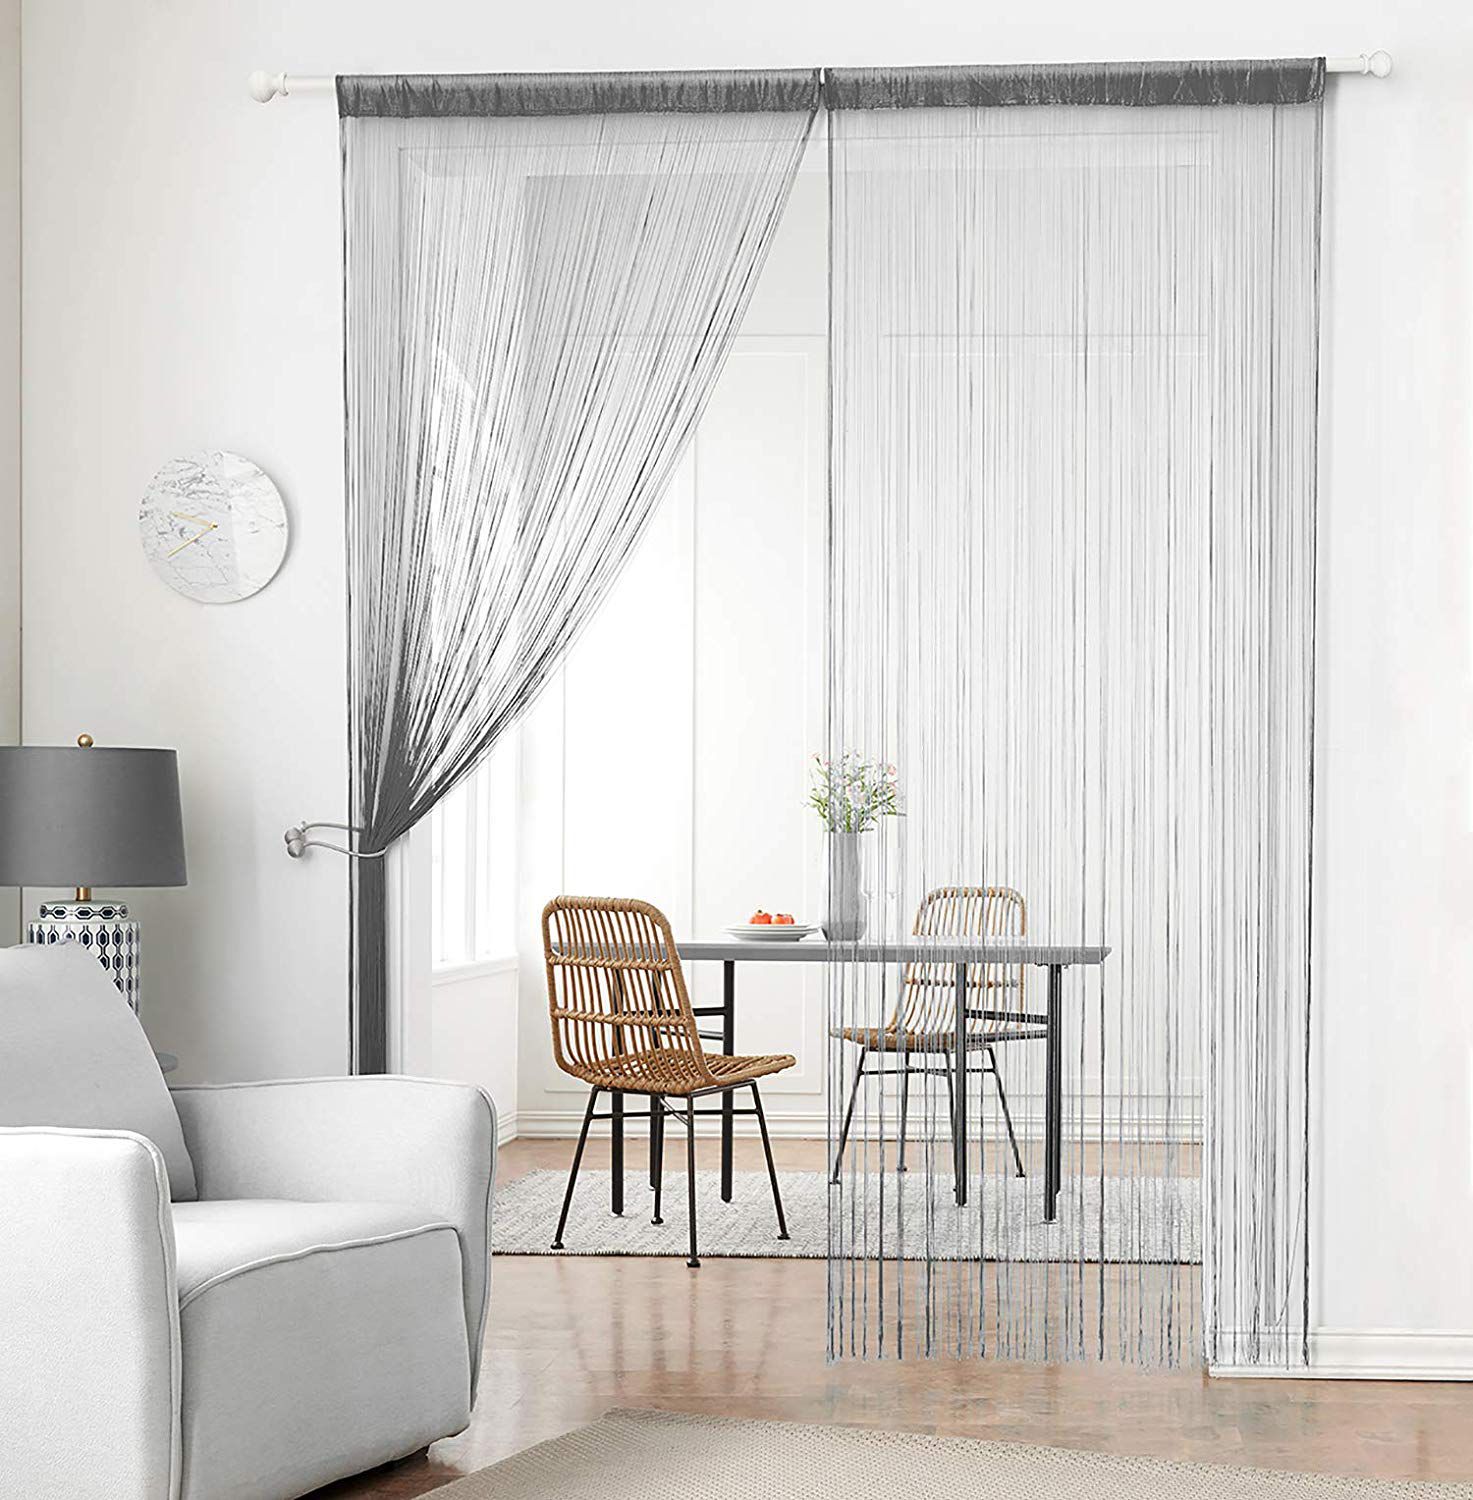     			YUTIRITI Set of 2 Door Ring Rod Polyester Curtains Grey